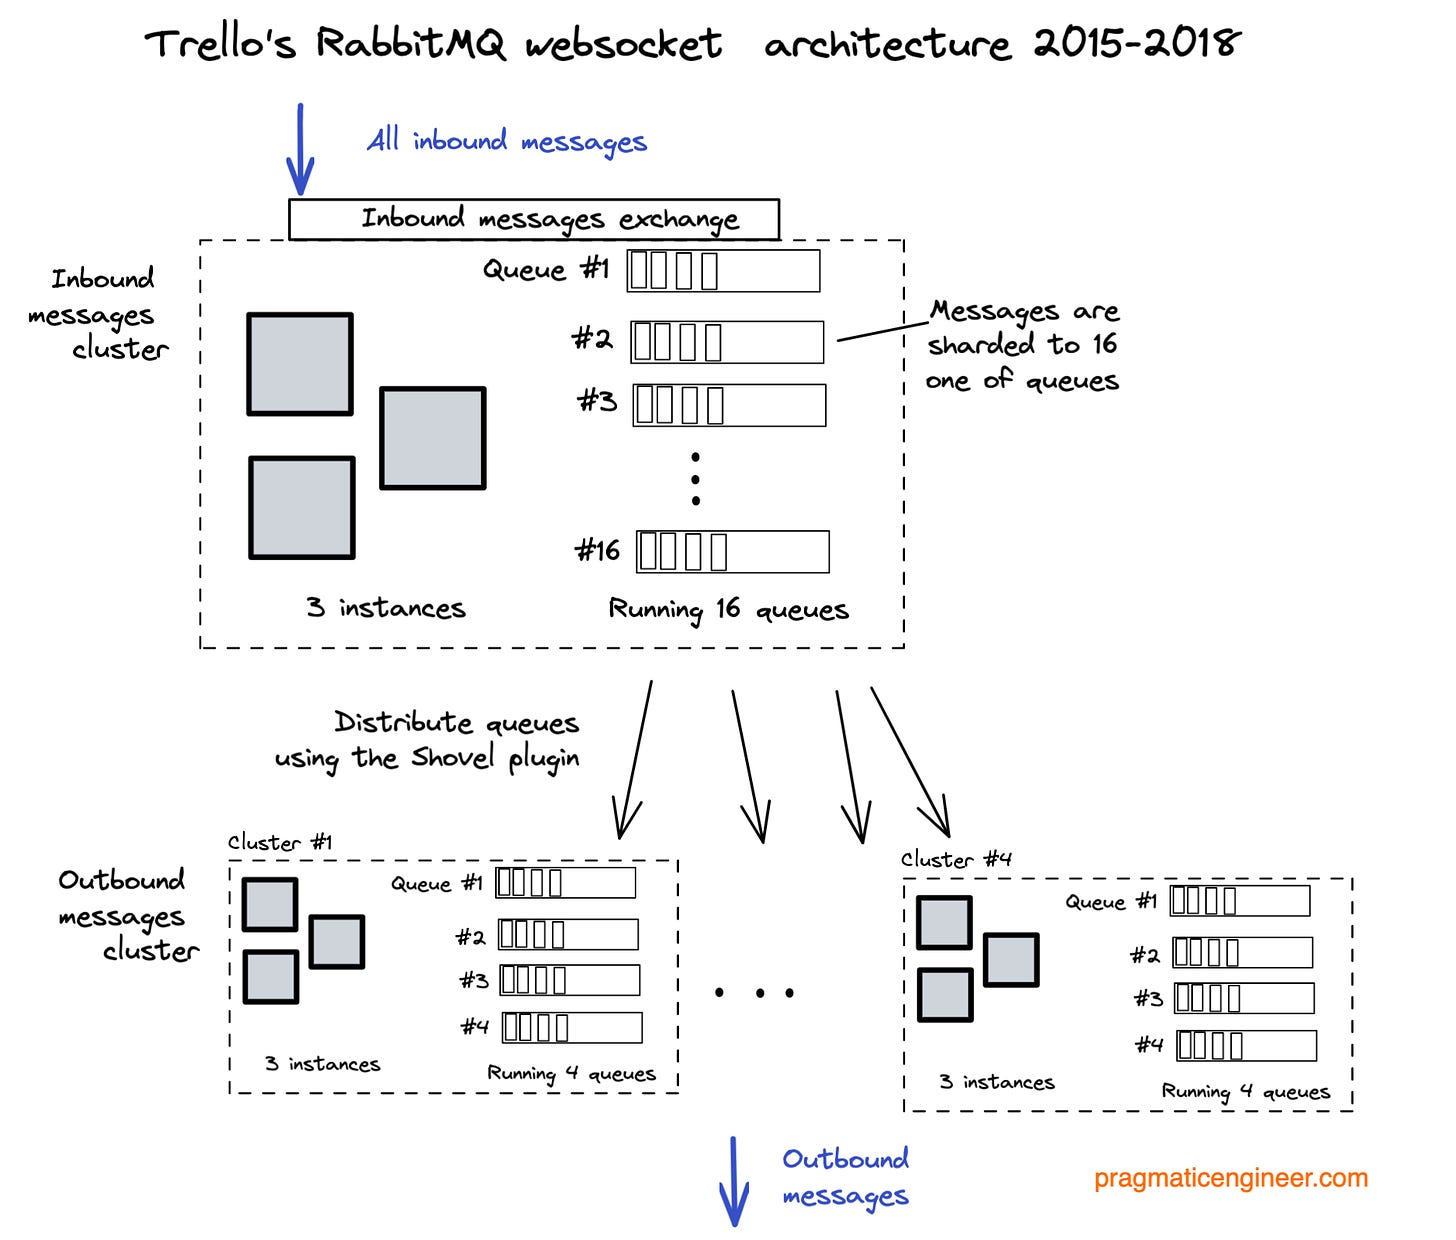 Trello's websocket architecture, built on RabbitMQ